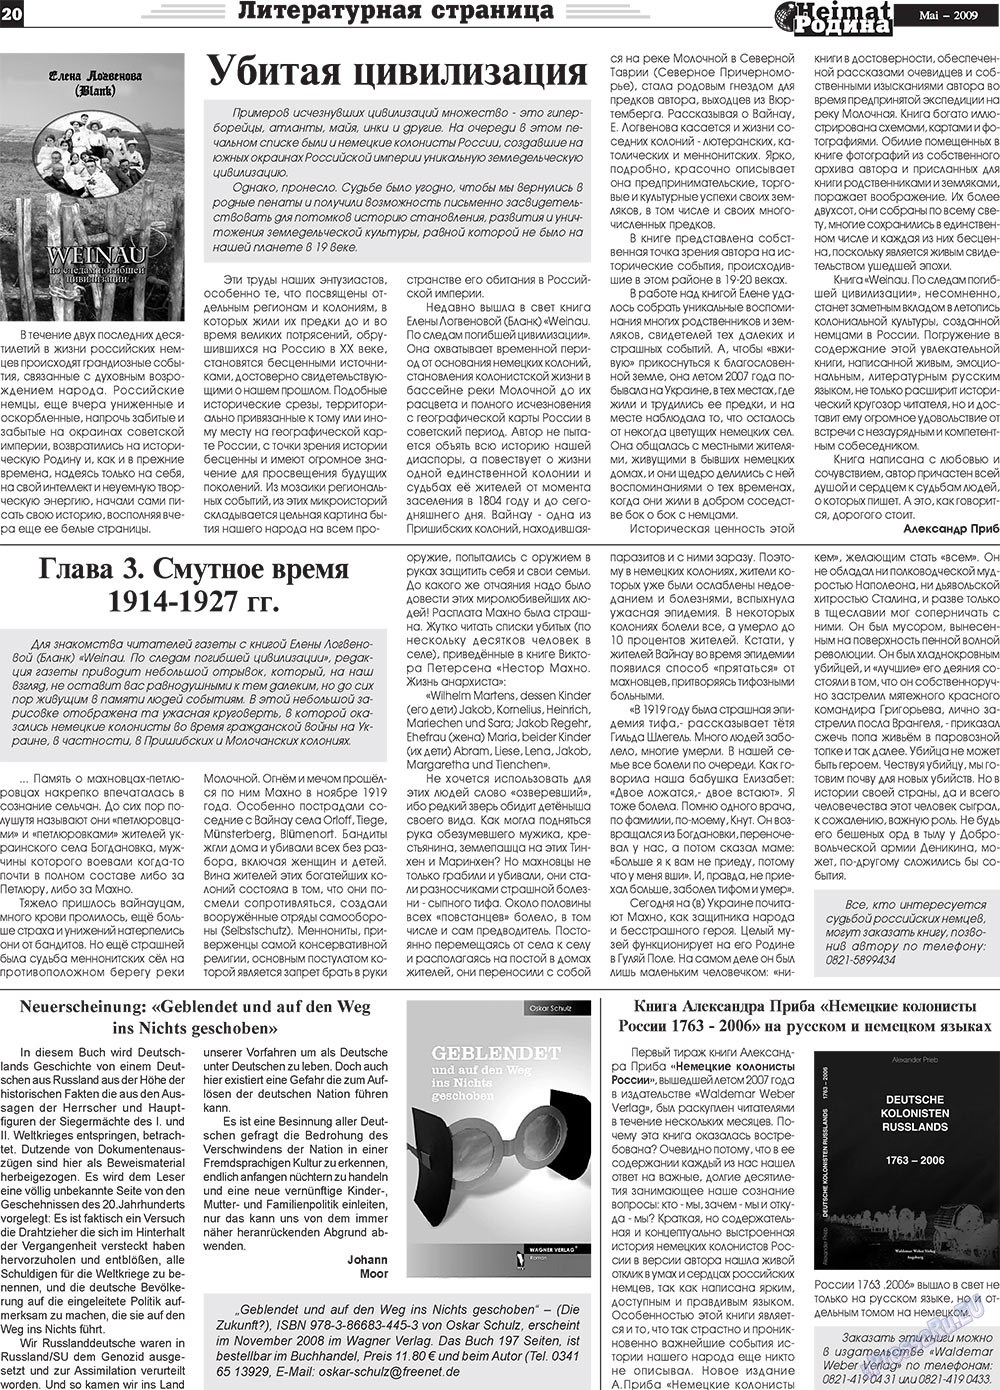 Heimat-Родина, газета. 2009 №5 стр.20